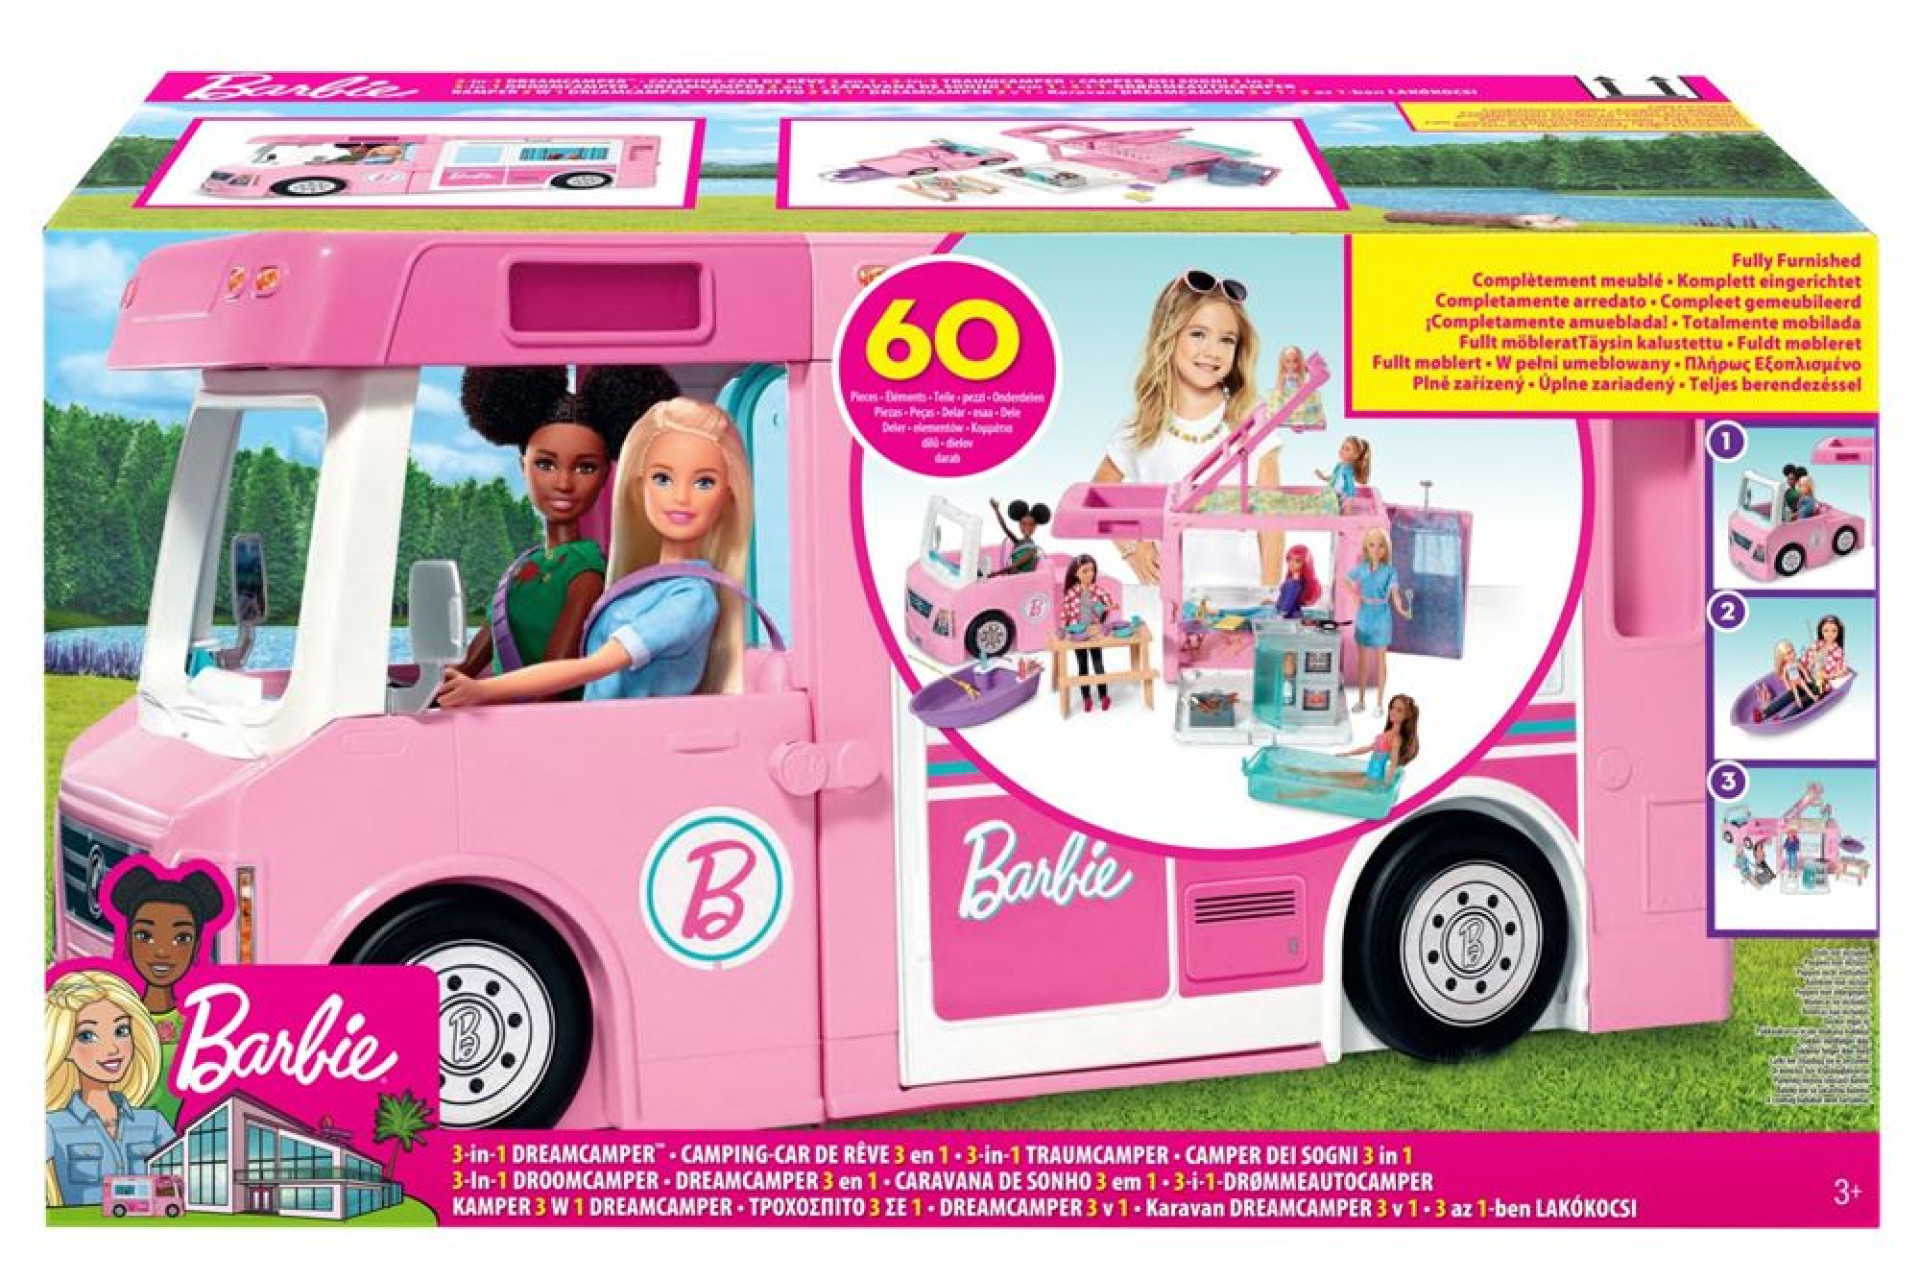 Acheter  DreamCamper transformable Barbie 3 en 1 